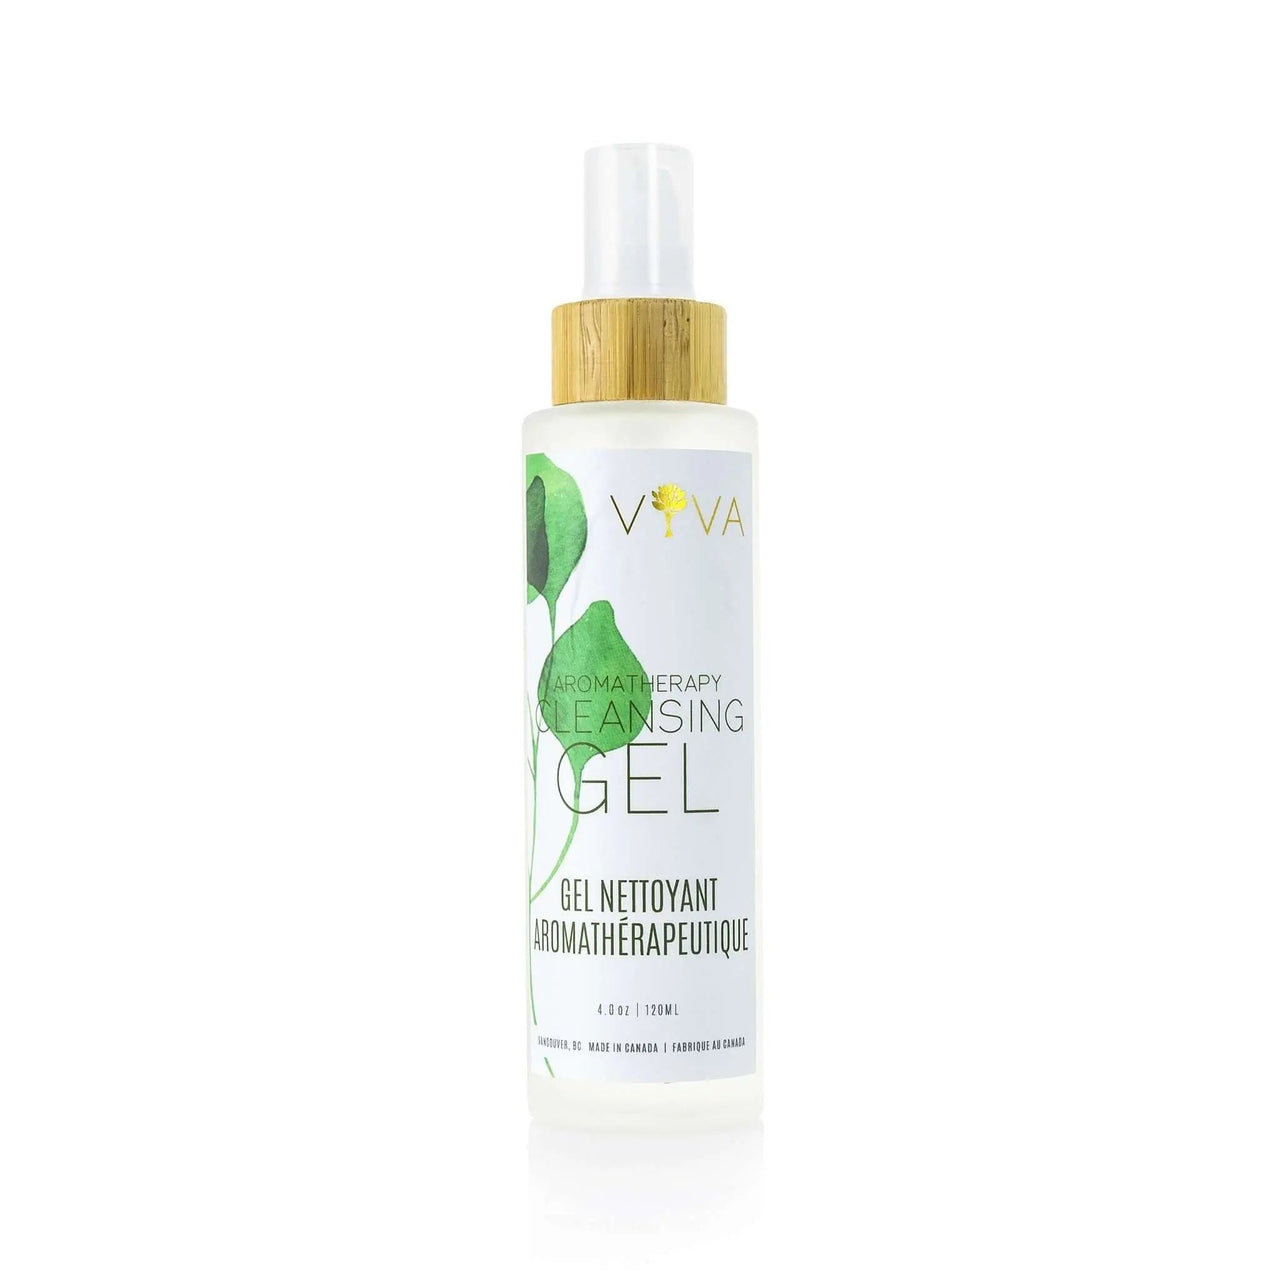 Viva Aromatherapy Cleansing Gel 240mL - Nutrition Plus